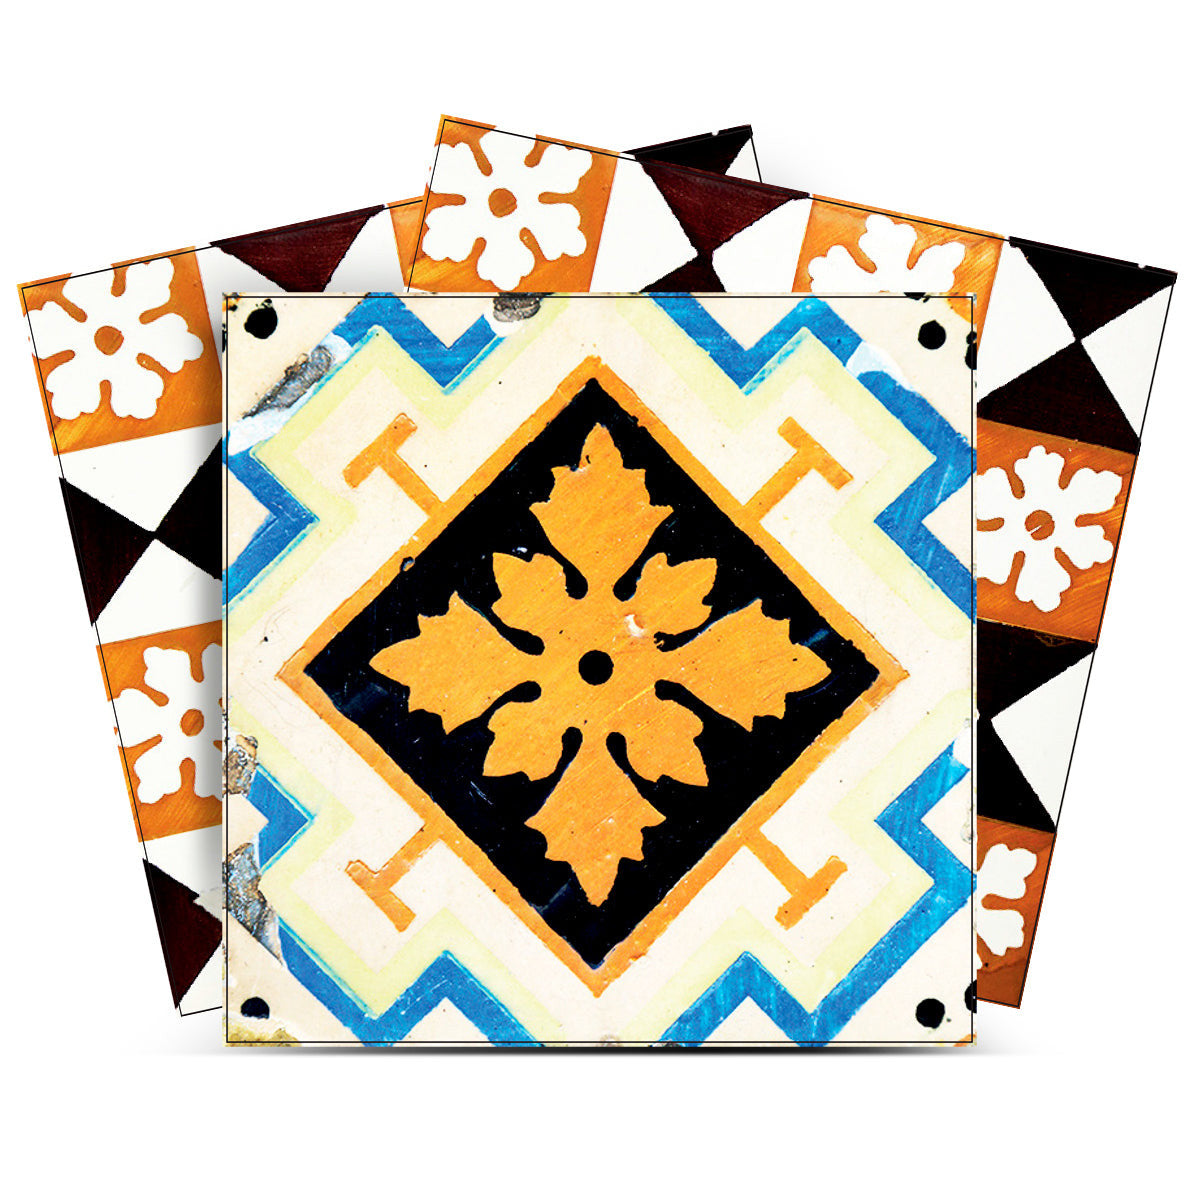 8" x 8" Snowflake and Diamond Peel and Stick Removable Tiles